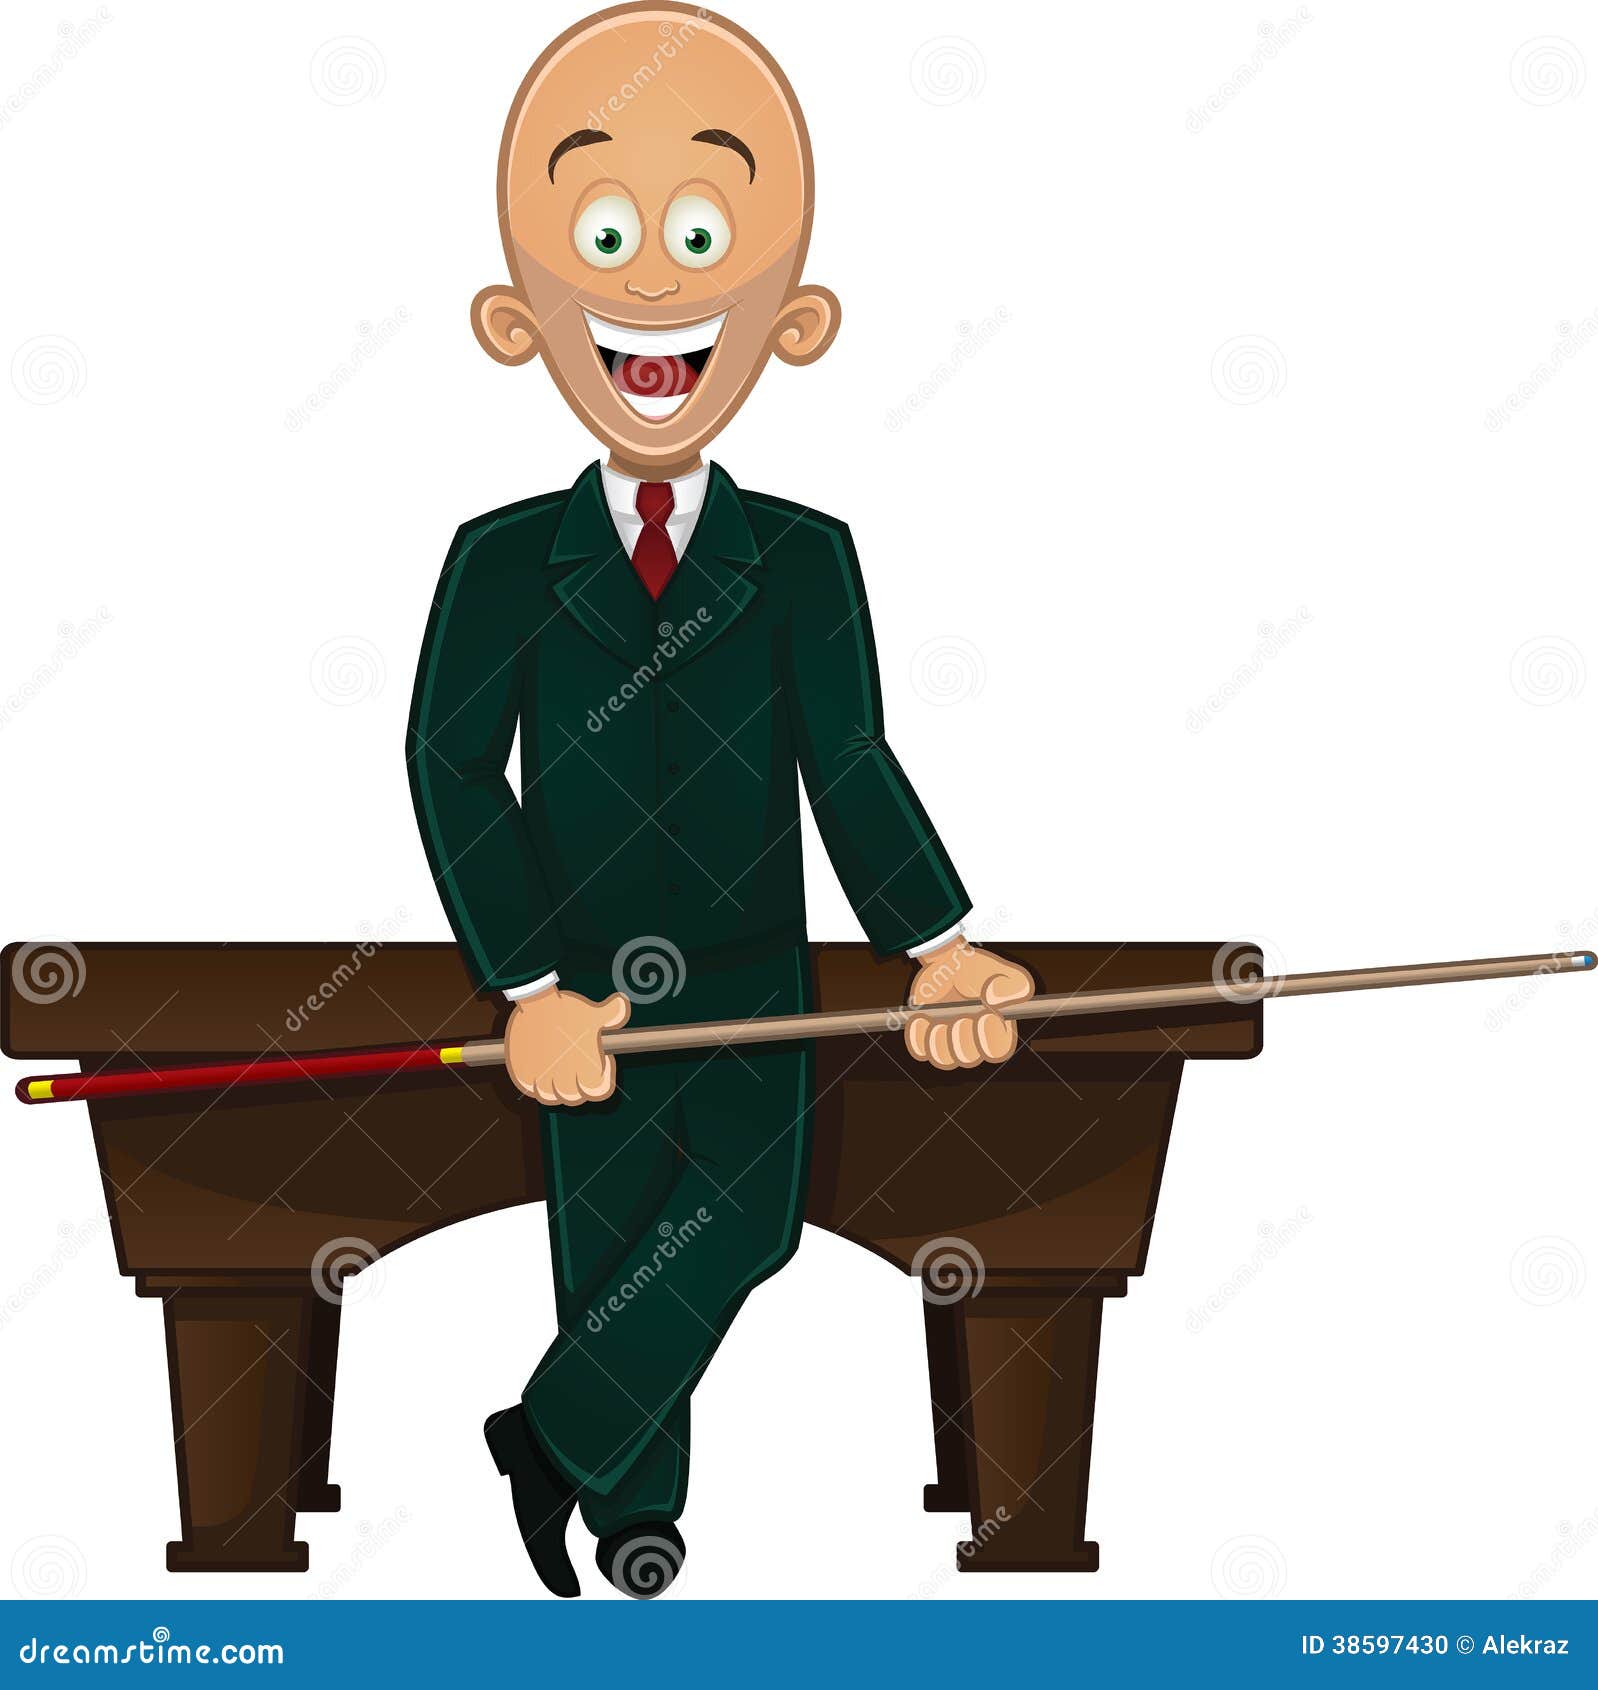 Billiard Player Holding Cue Stock Vector Illustration of